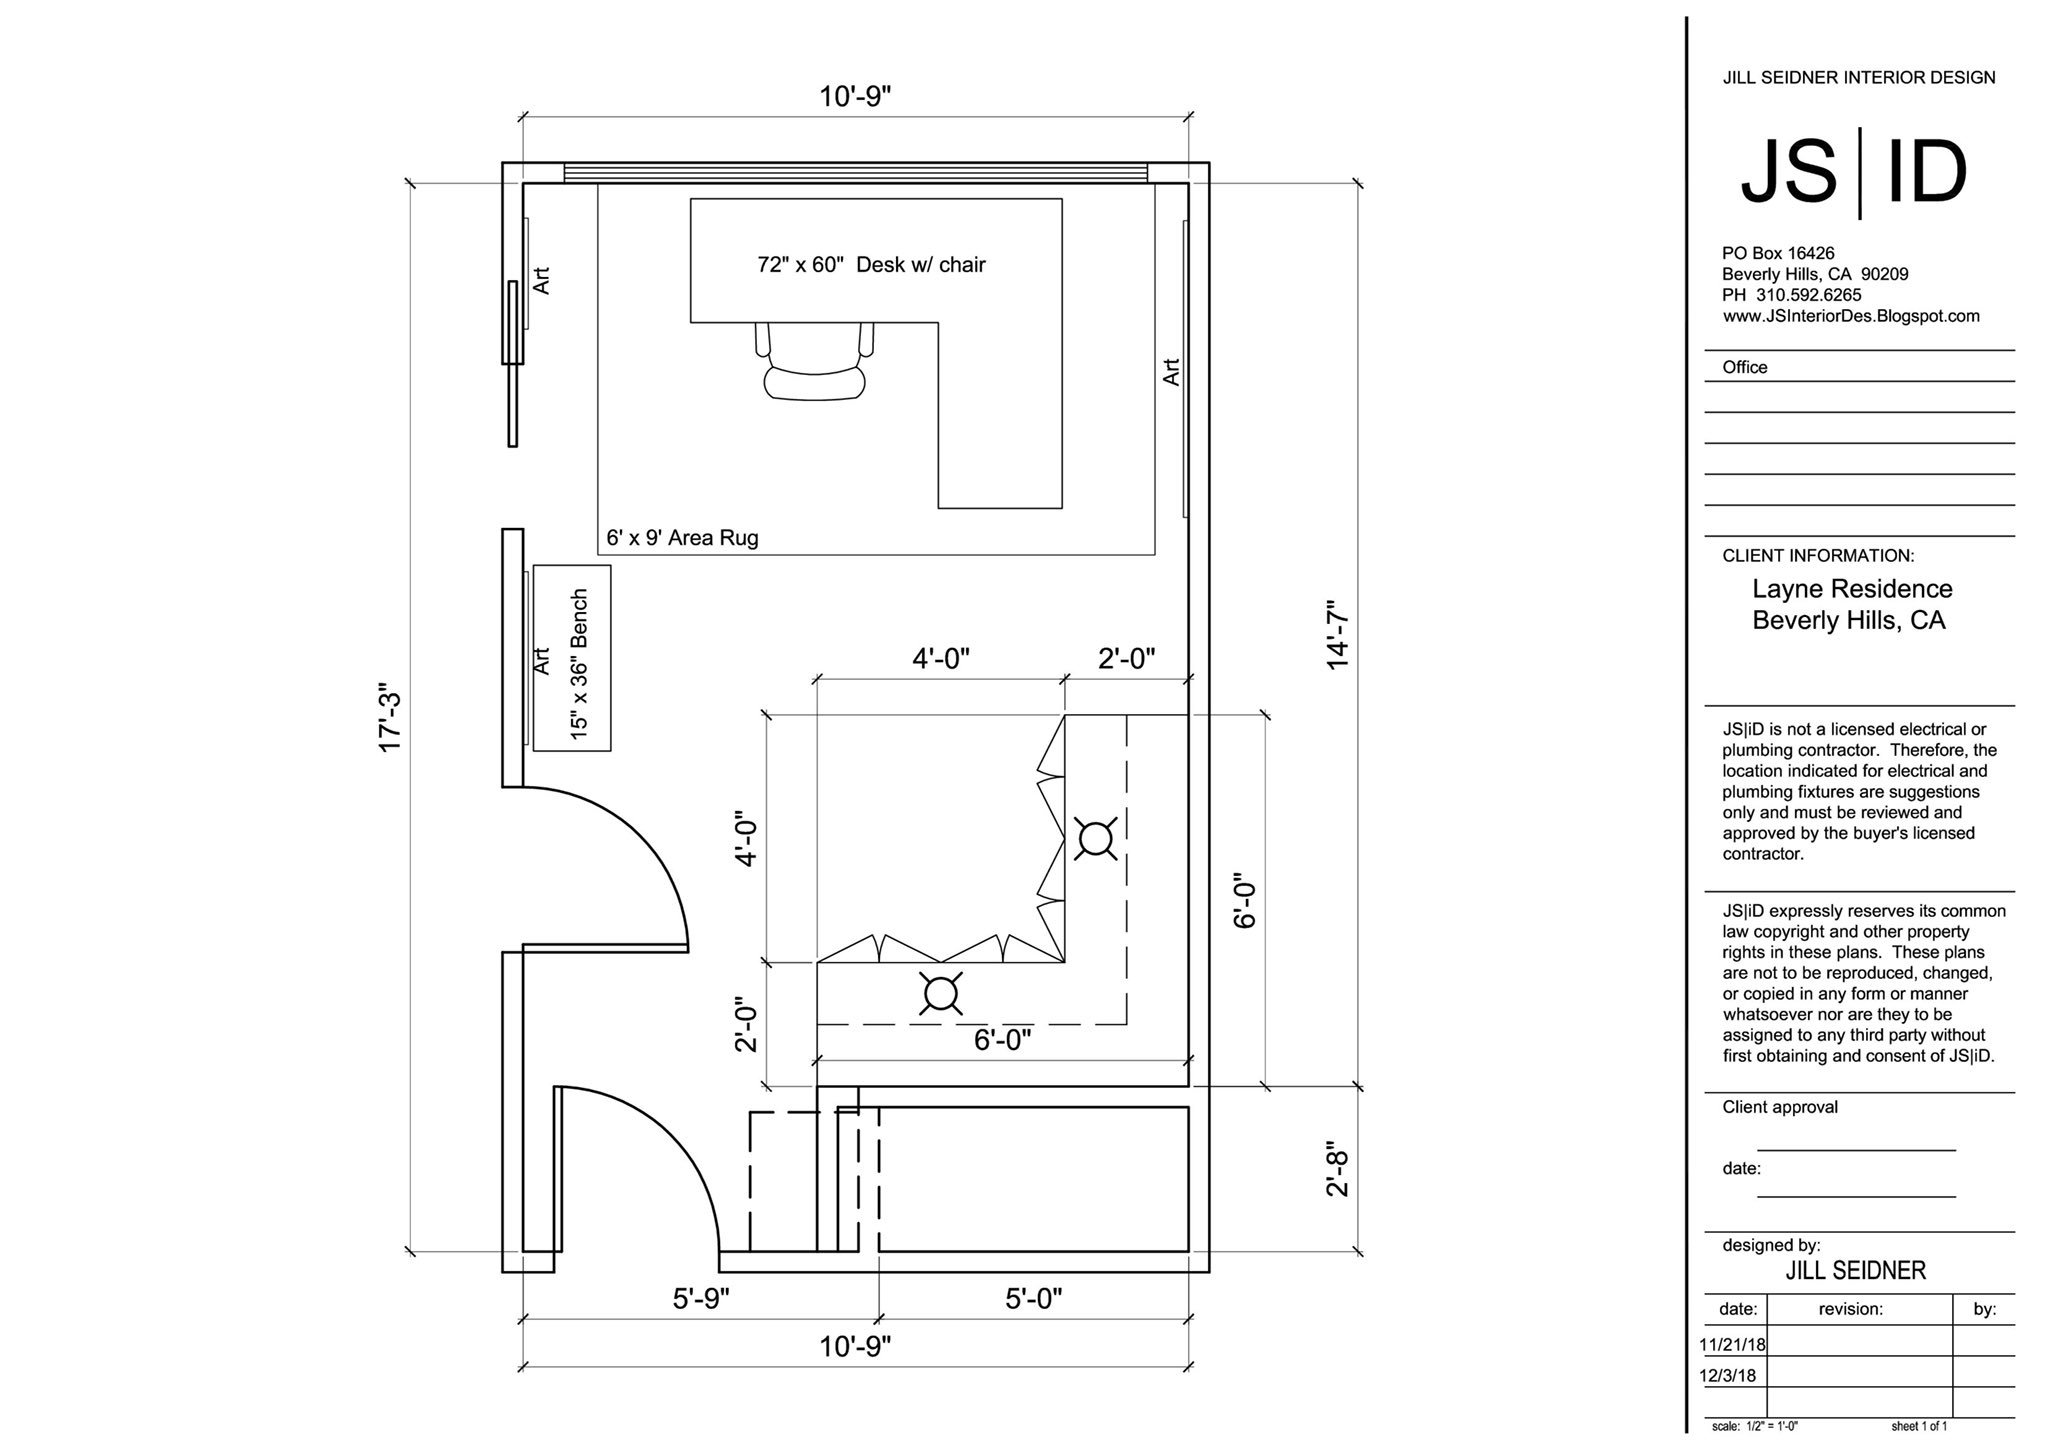 Building Interiors Dimensions & Drawings | Dimensions.com